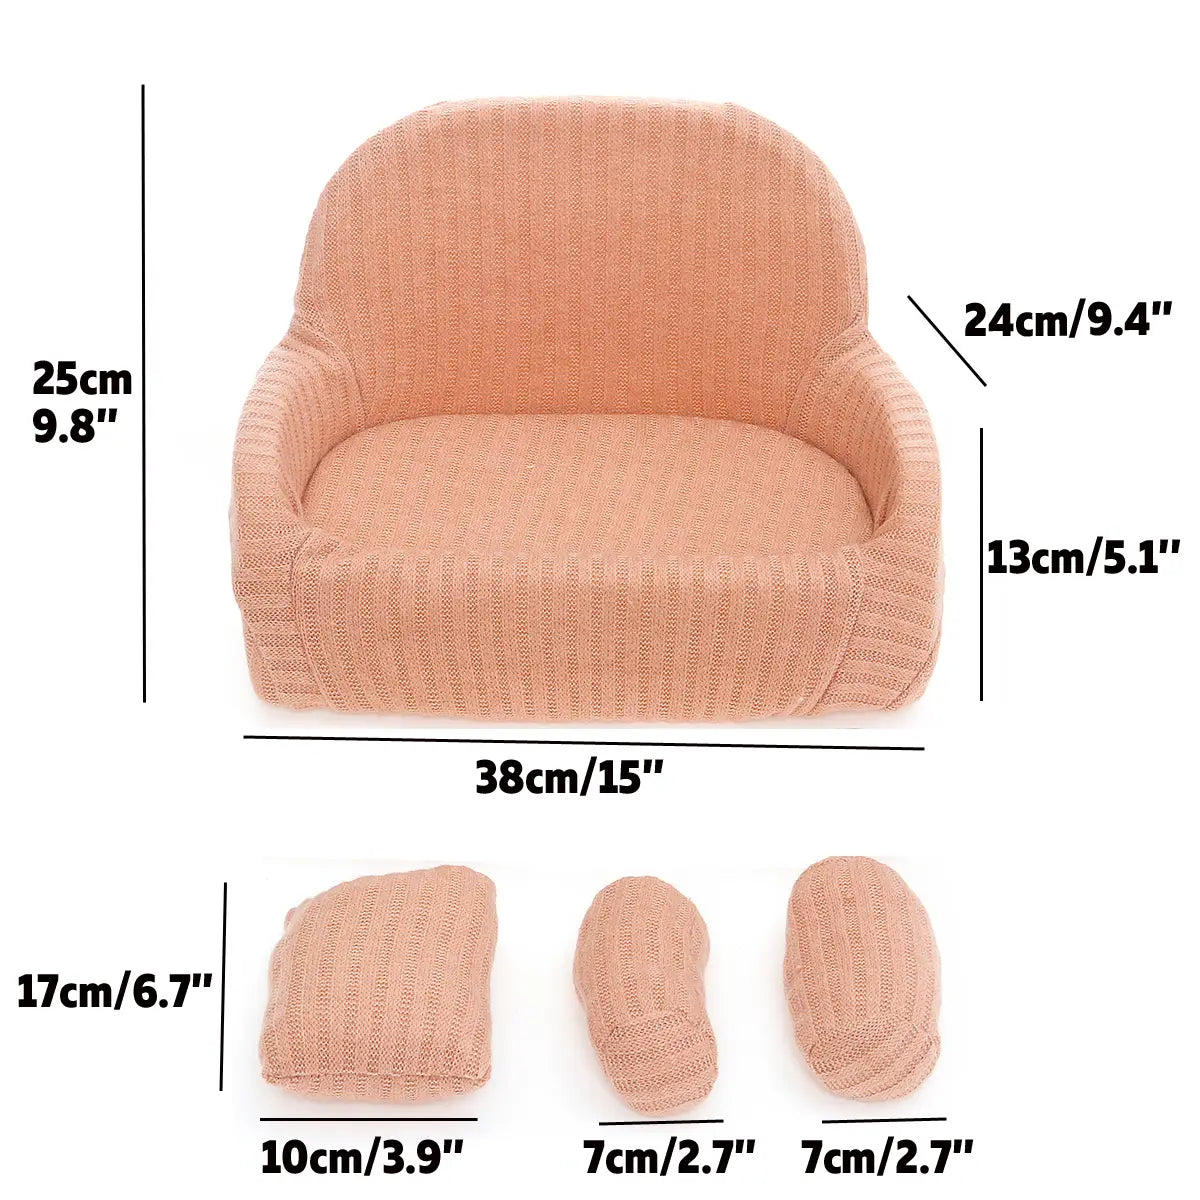 4 In1 Newborn Baby Boy Girl Photography Sofa Chair Soft